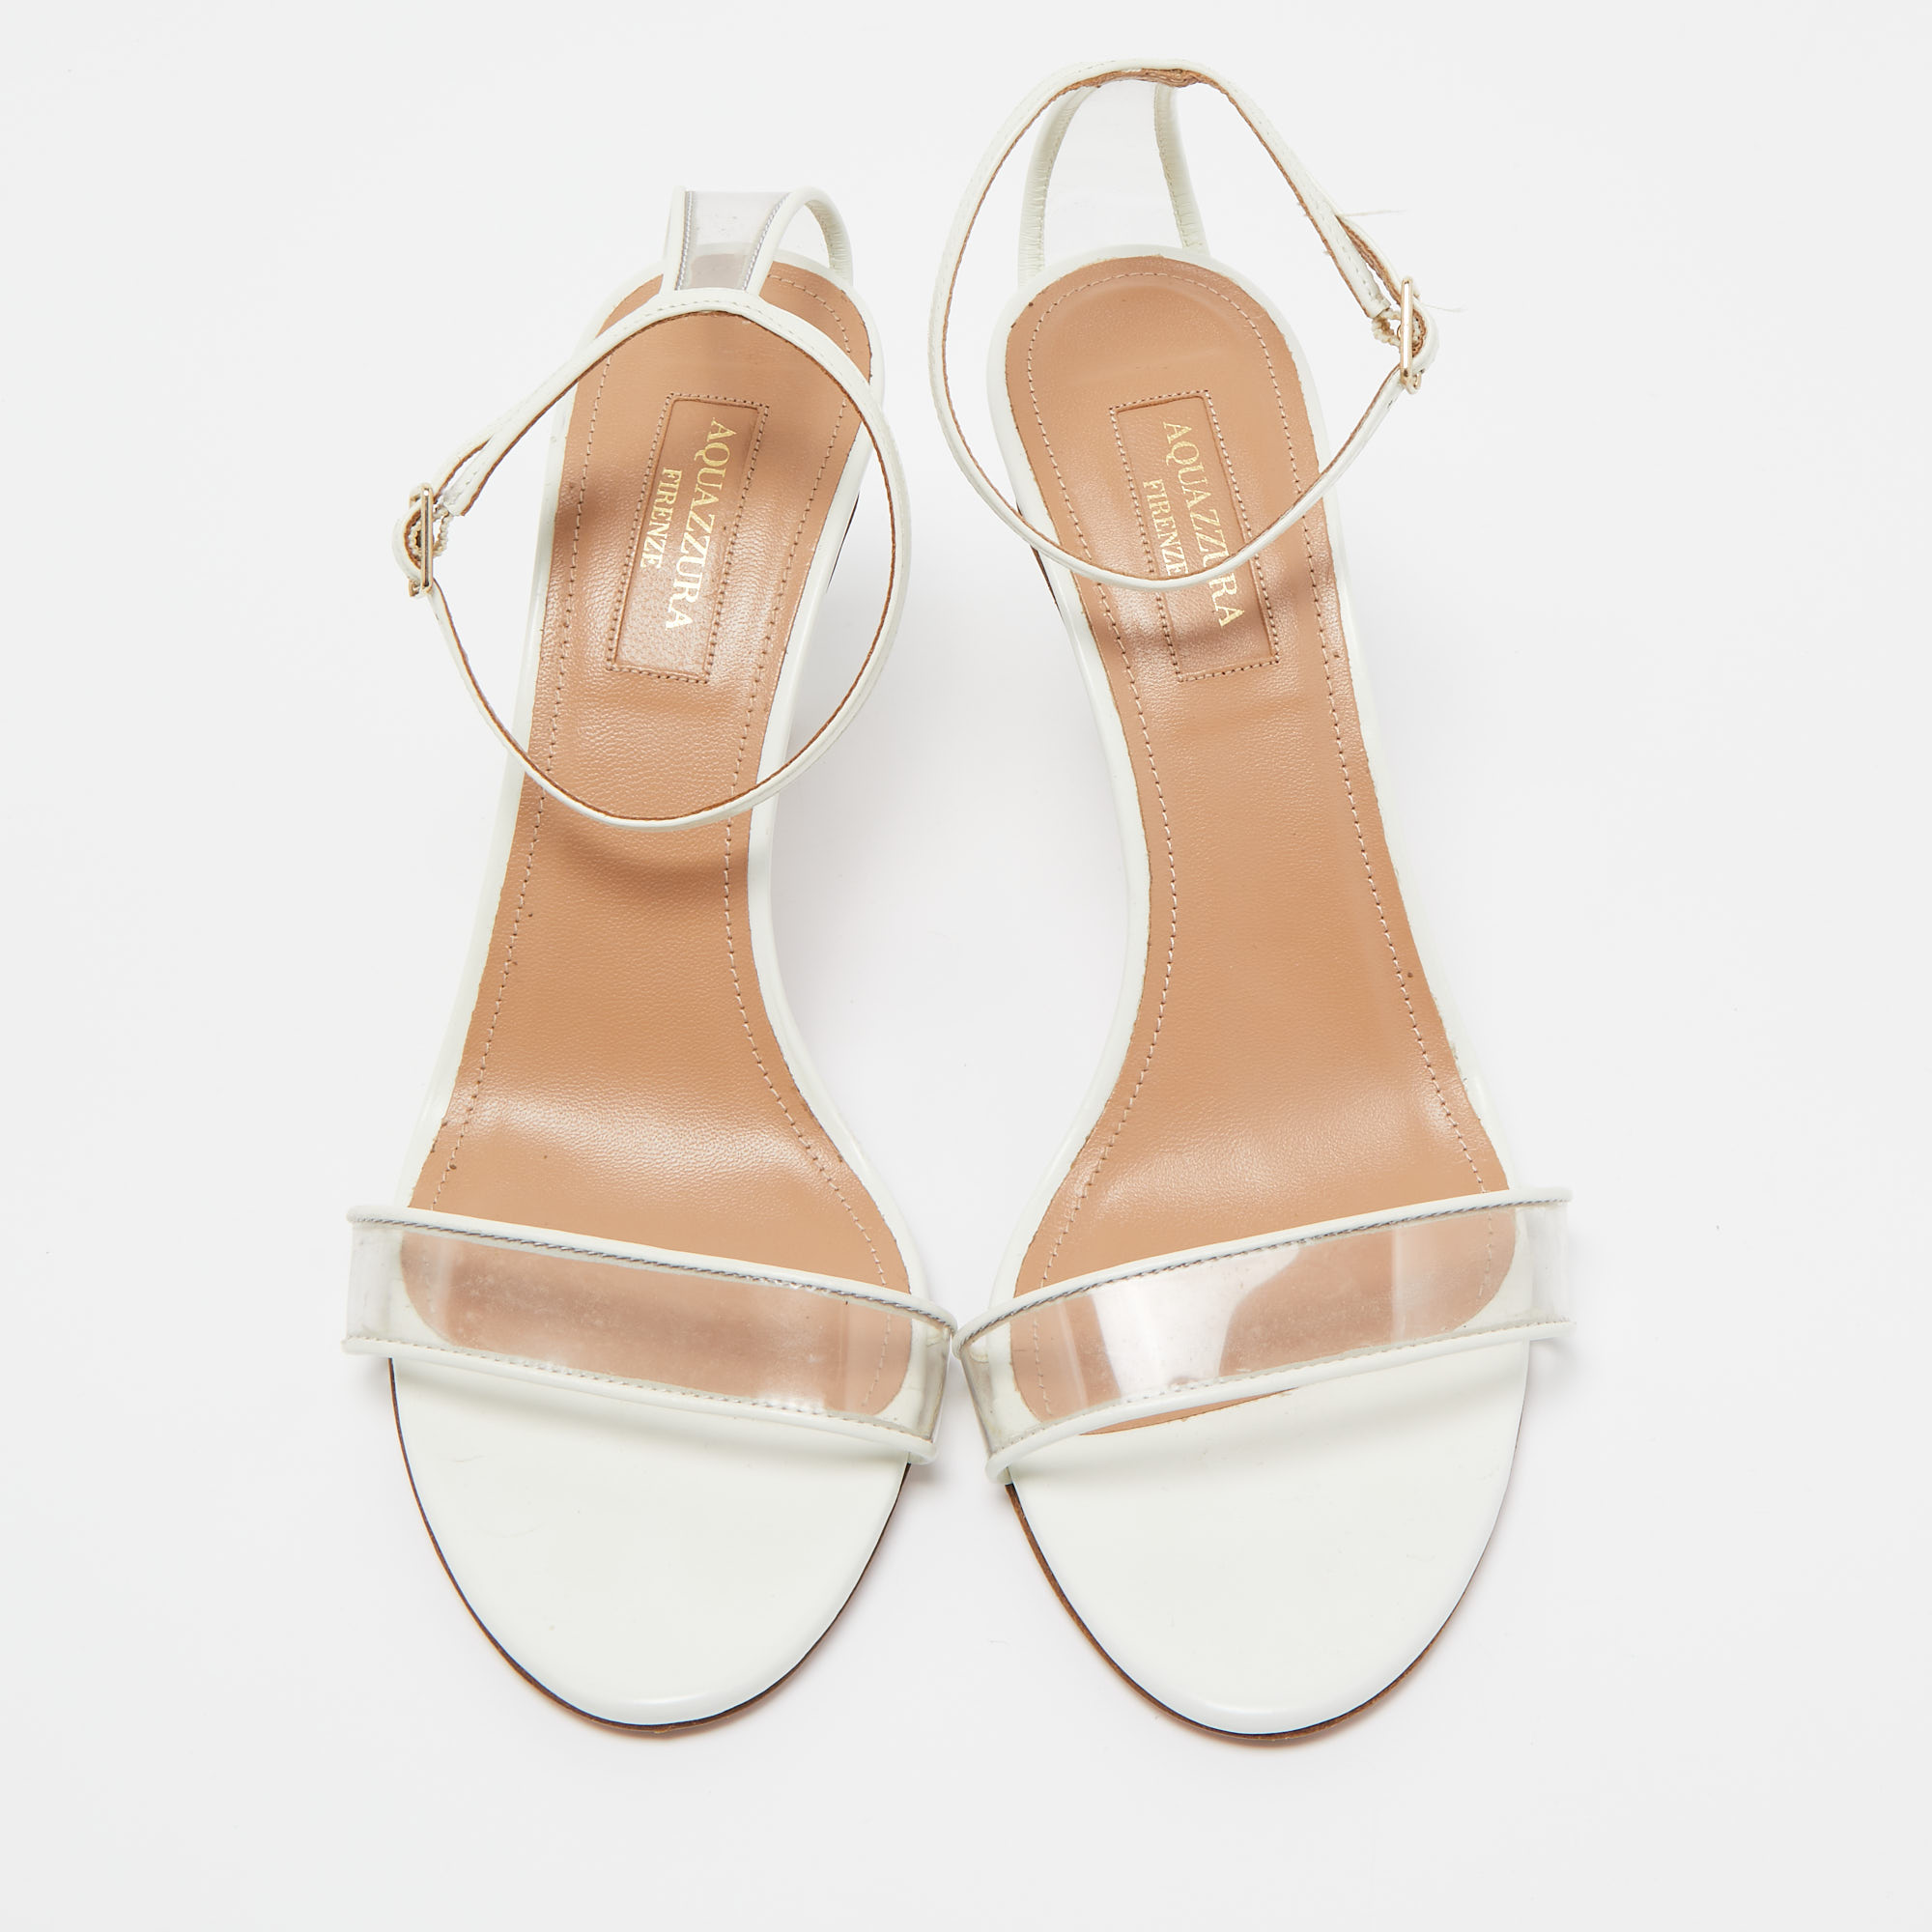 Aquazzura White Leather And PVC Ankle Strap Sandals Size 38.5